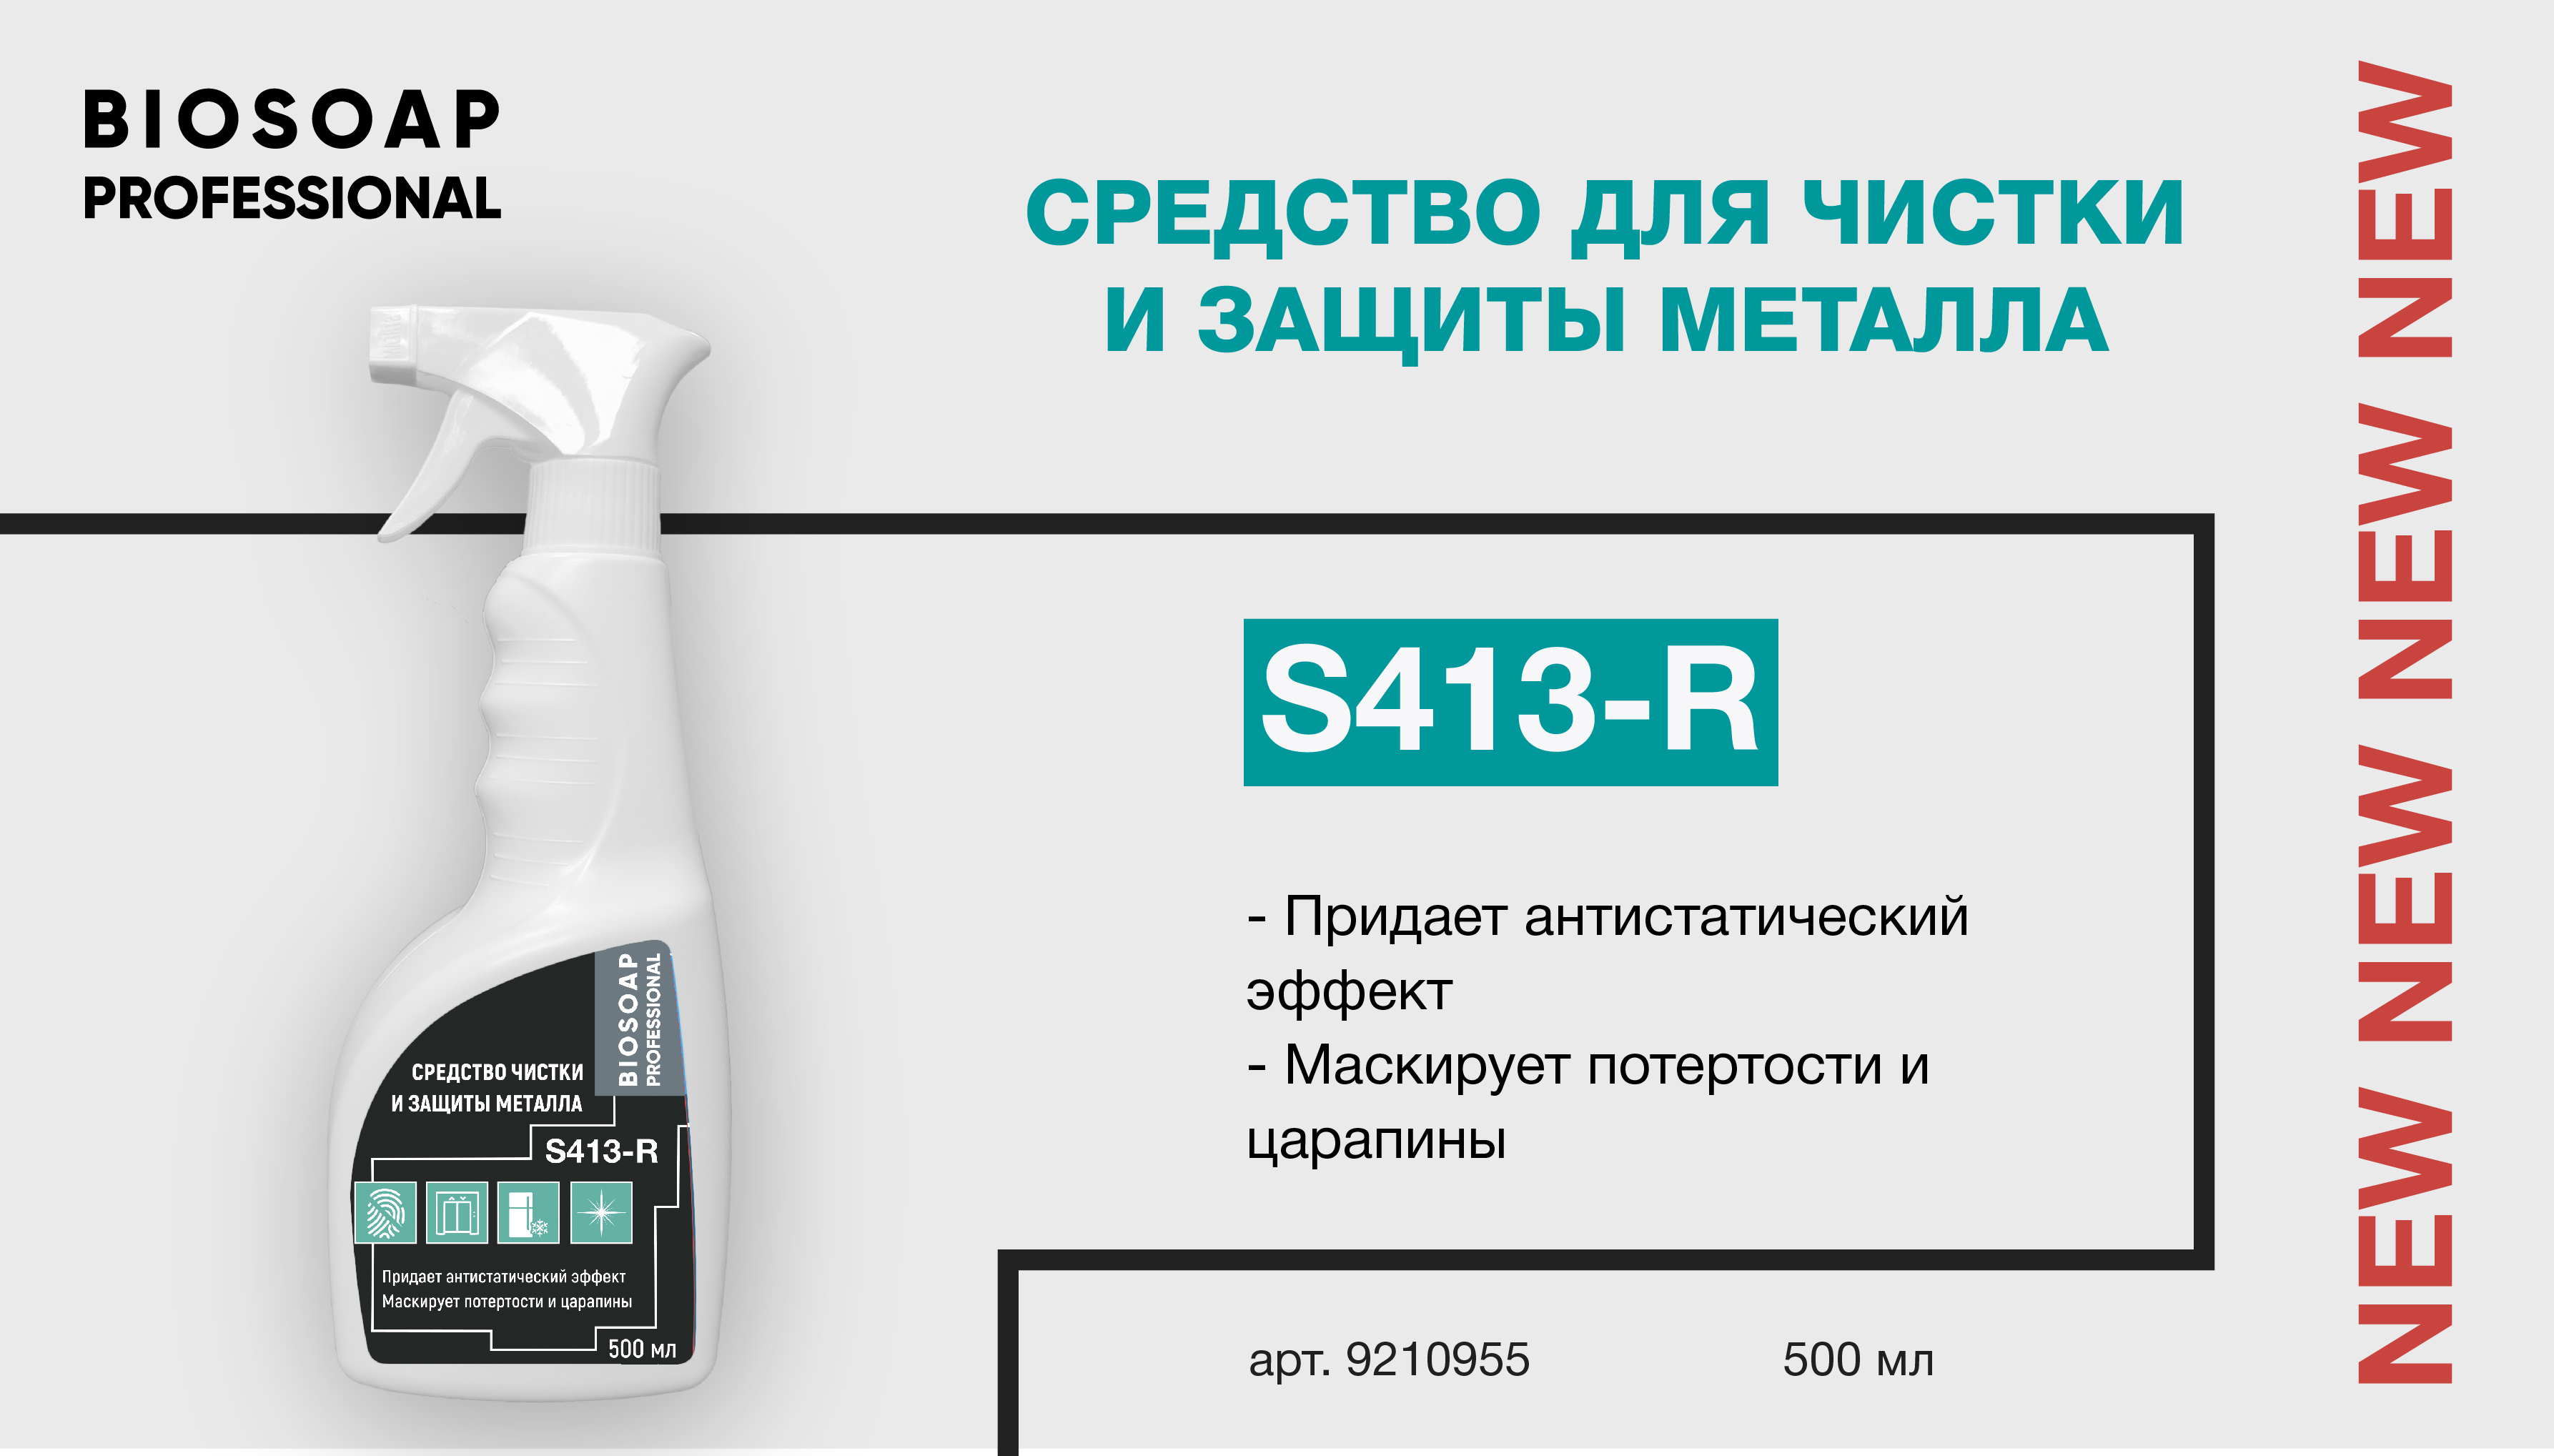 Новинка-Средство чистки и защиты металла S413-R